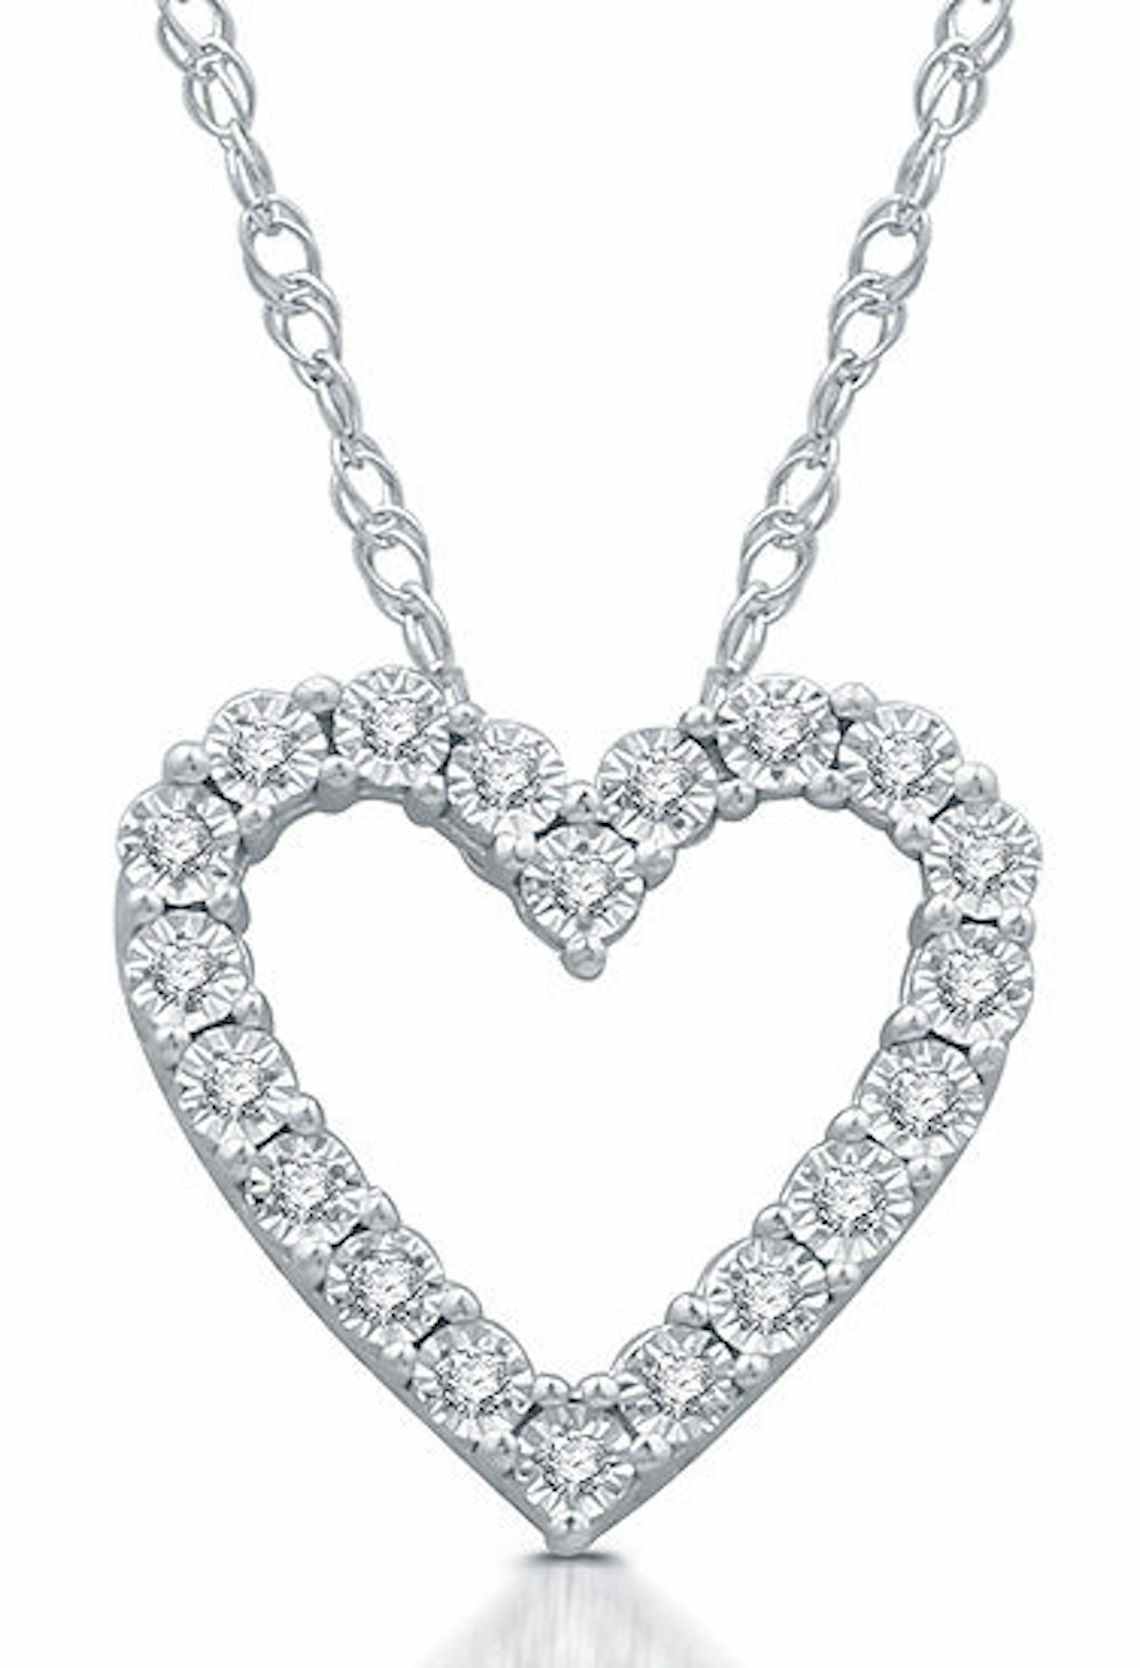 jcpenney-diamond-heart-pendant-necklace-013021